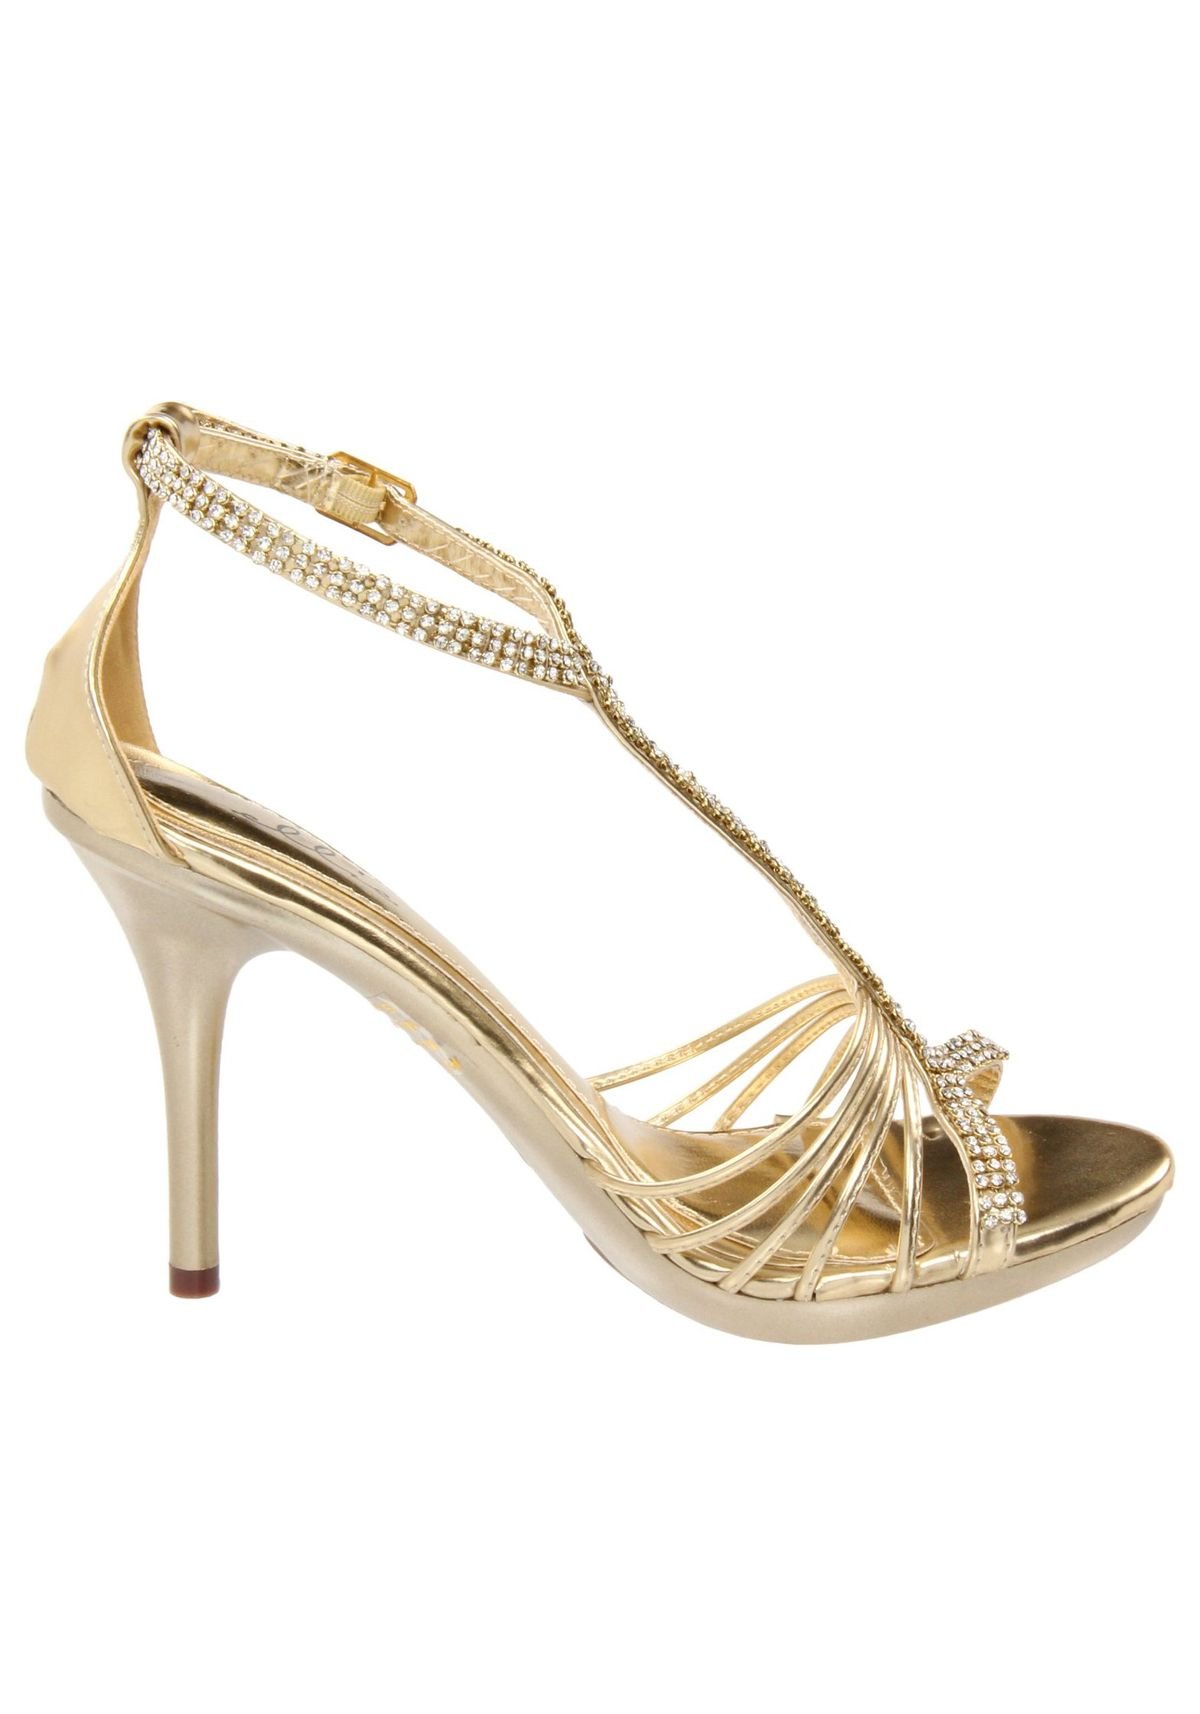 Ellie Shoes 431-MAJESTIC Majestic 4'' Heel Rhinestone Sandal | eBay